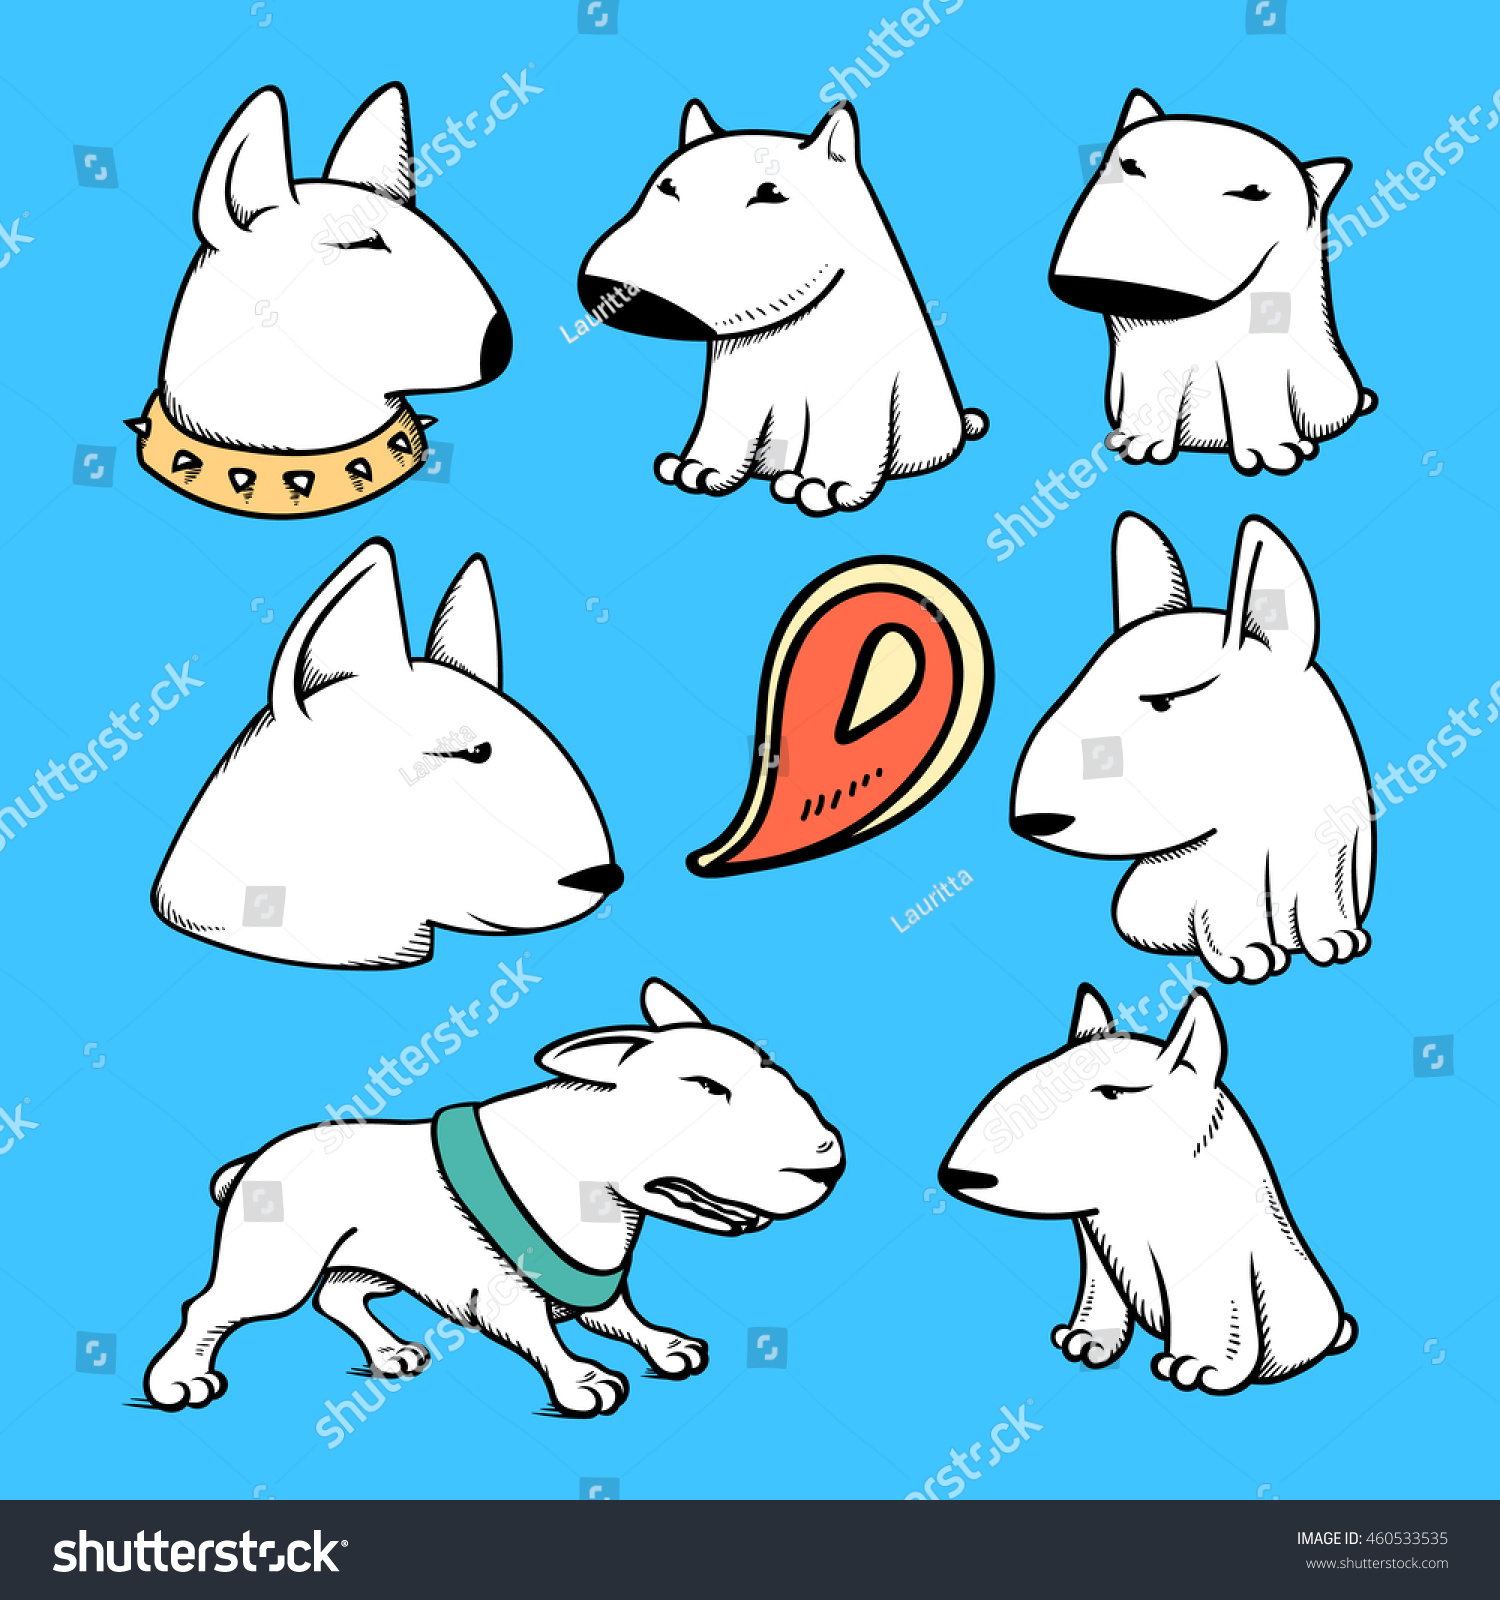 Edit Vectors Free Online - Dogs characters | Shutterstock Editor